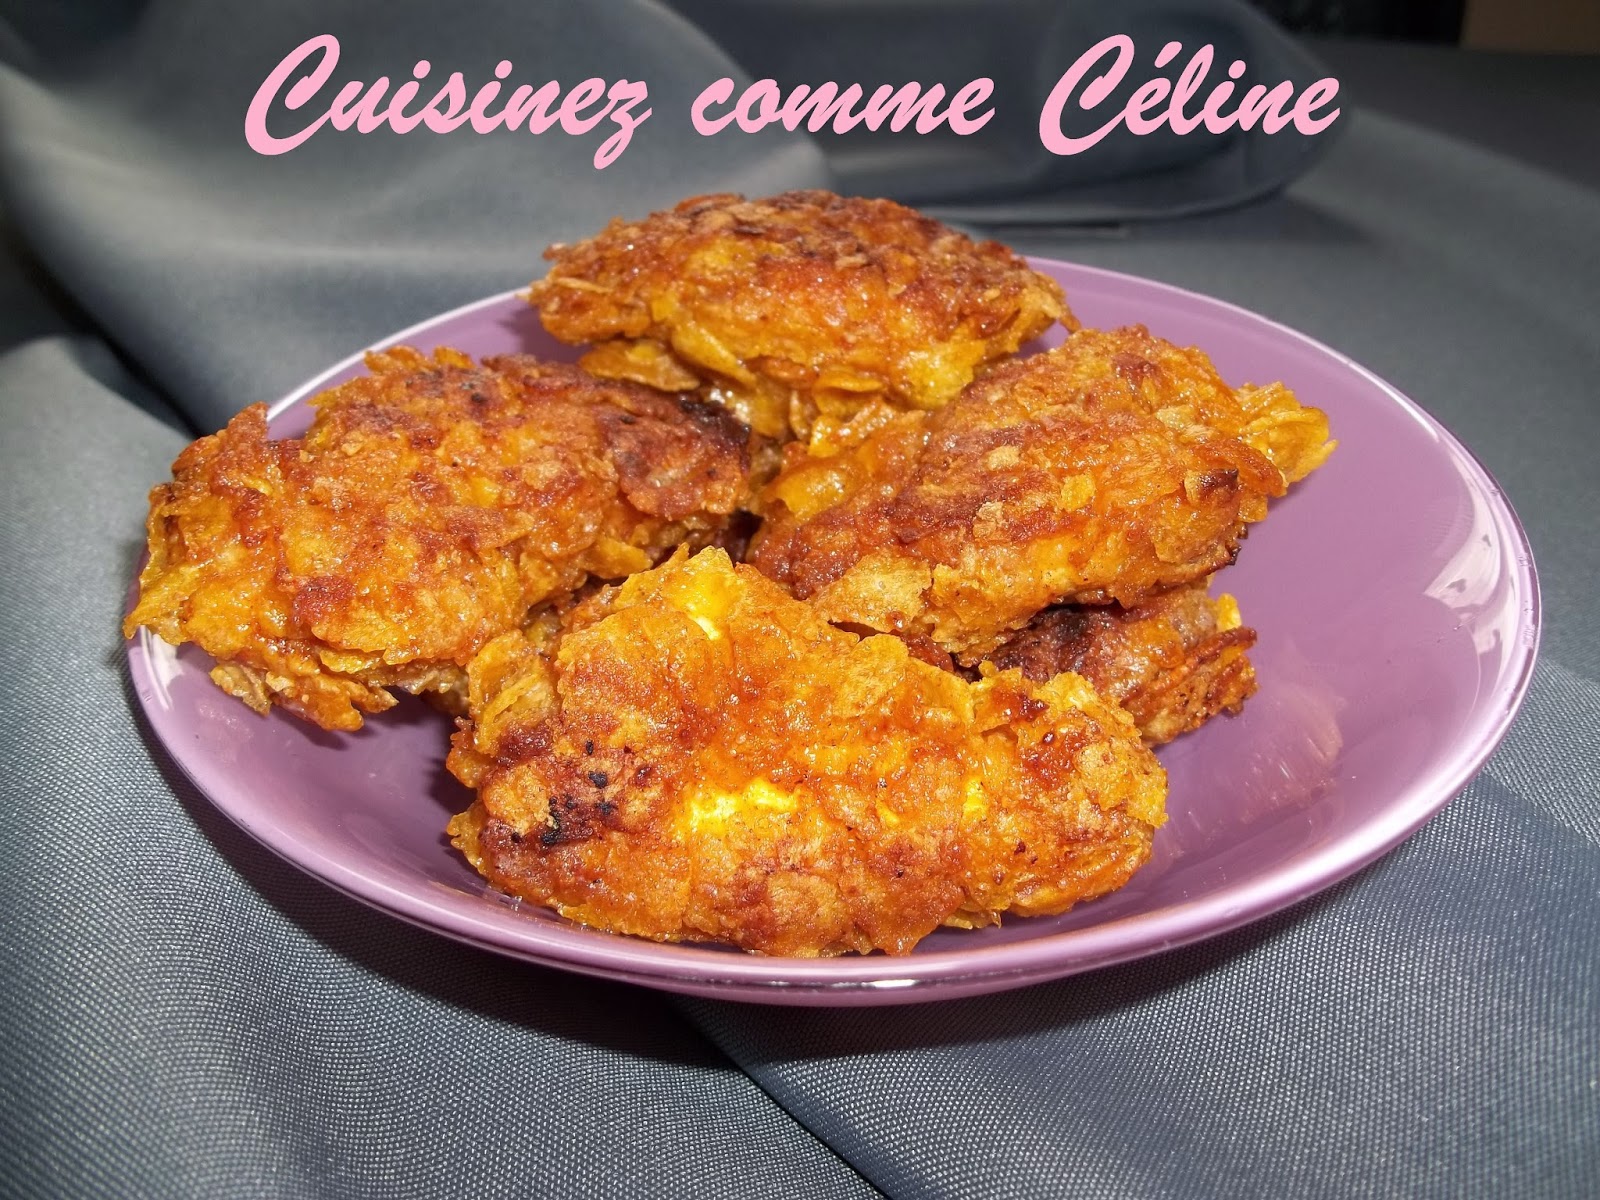 http://cuisinezcommeceline.blogspot.fr/2015/03/poulet-kfc.html